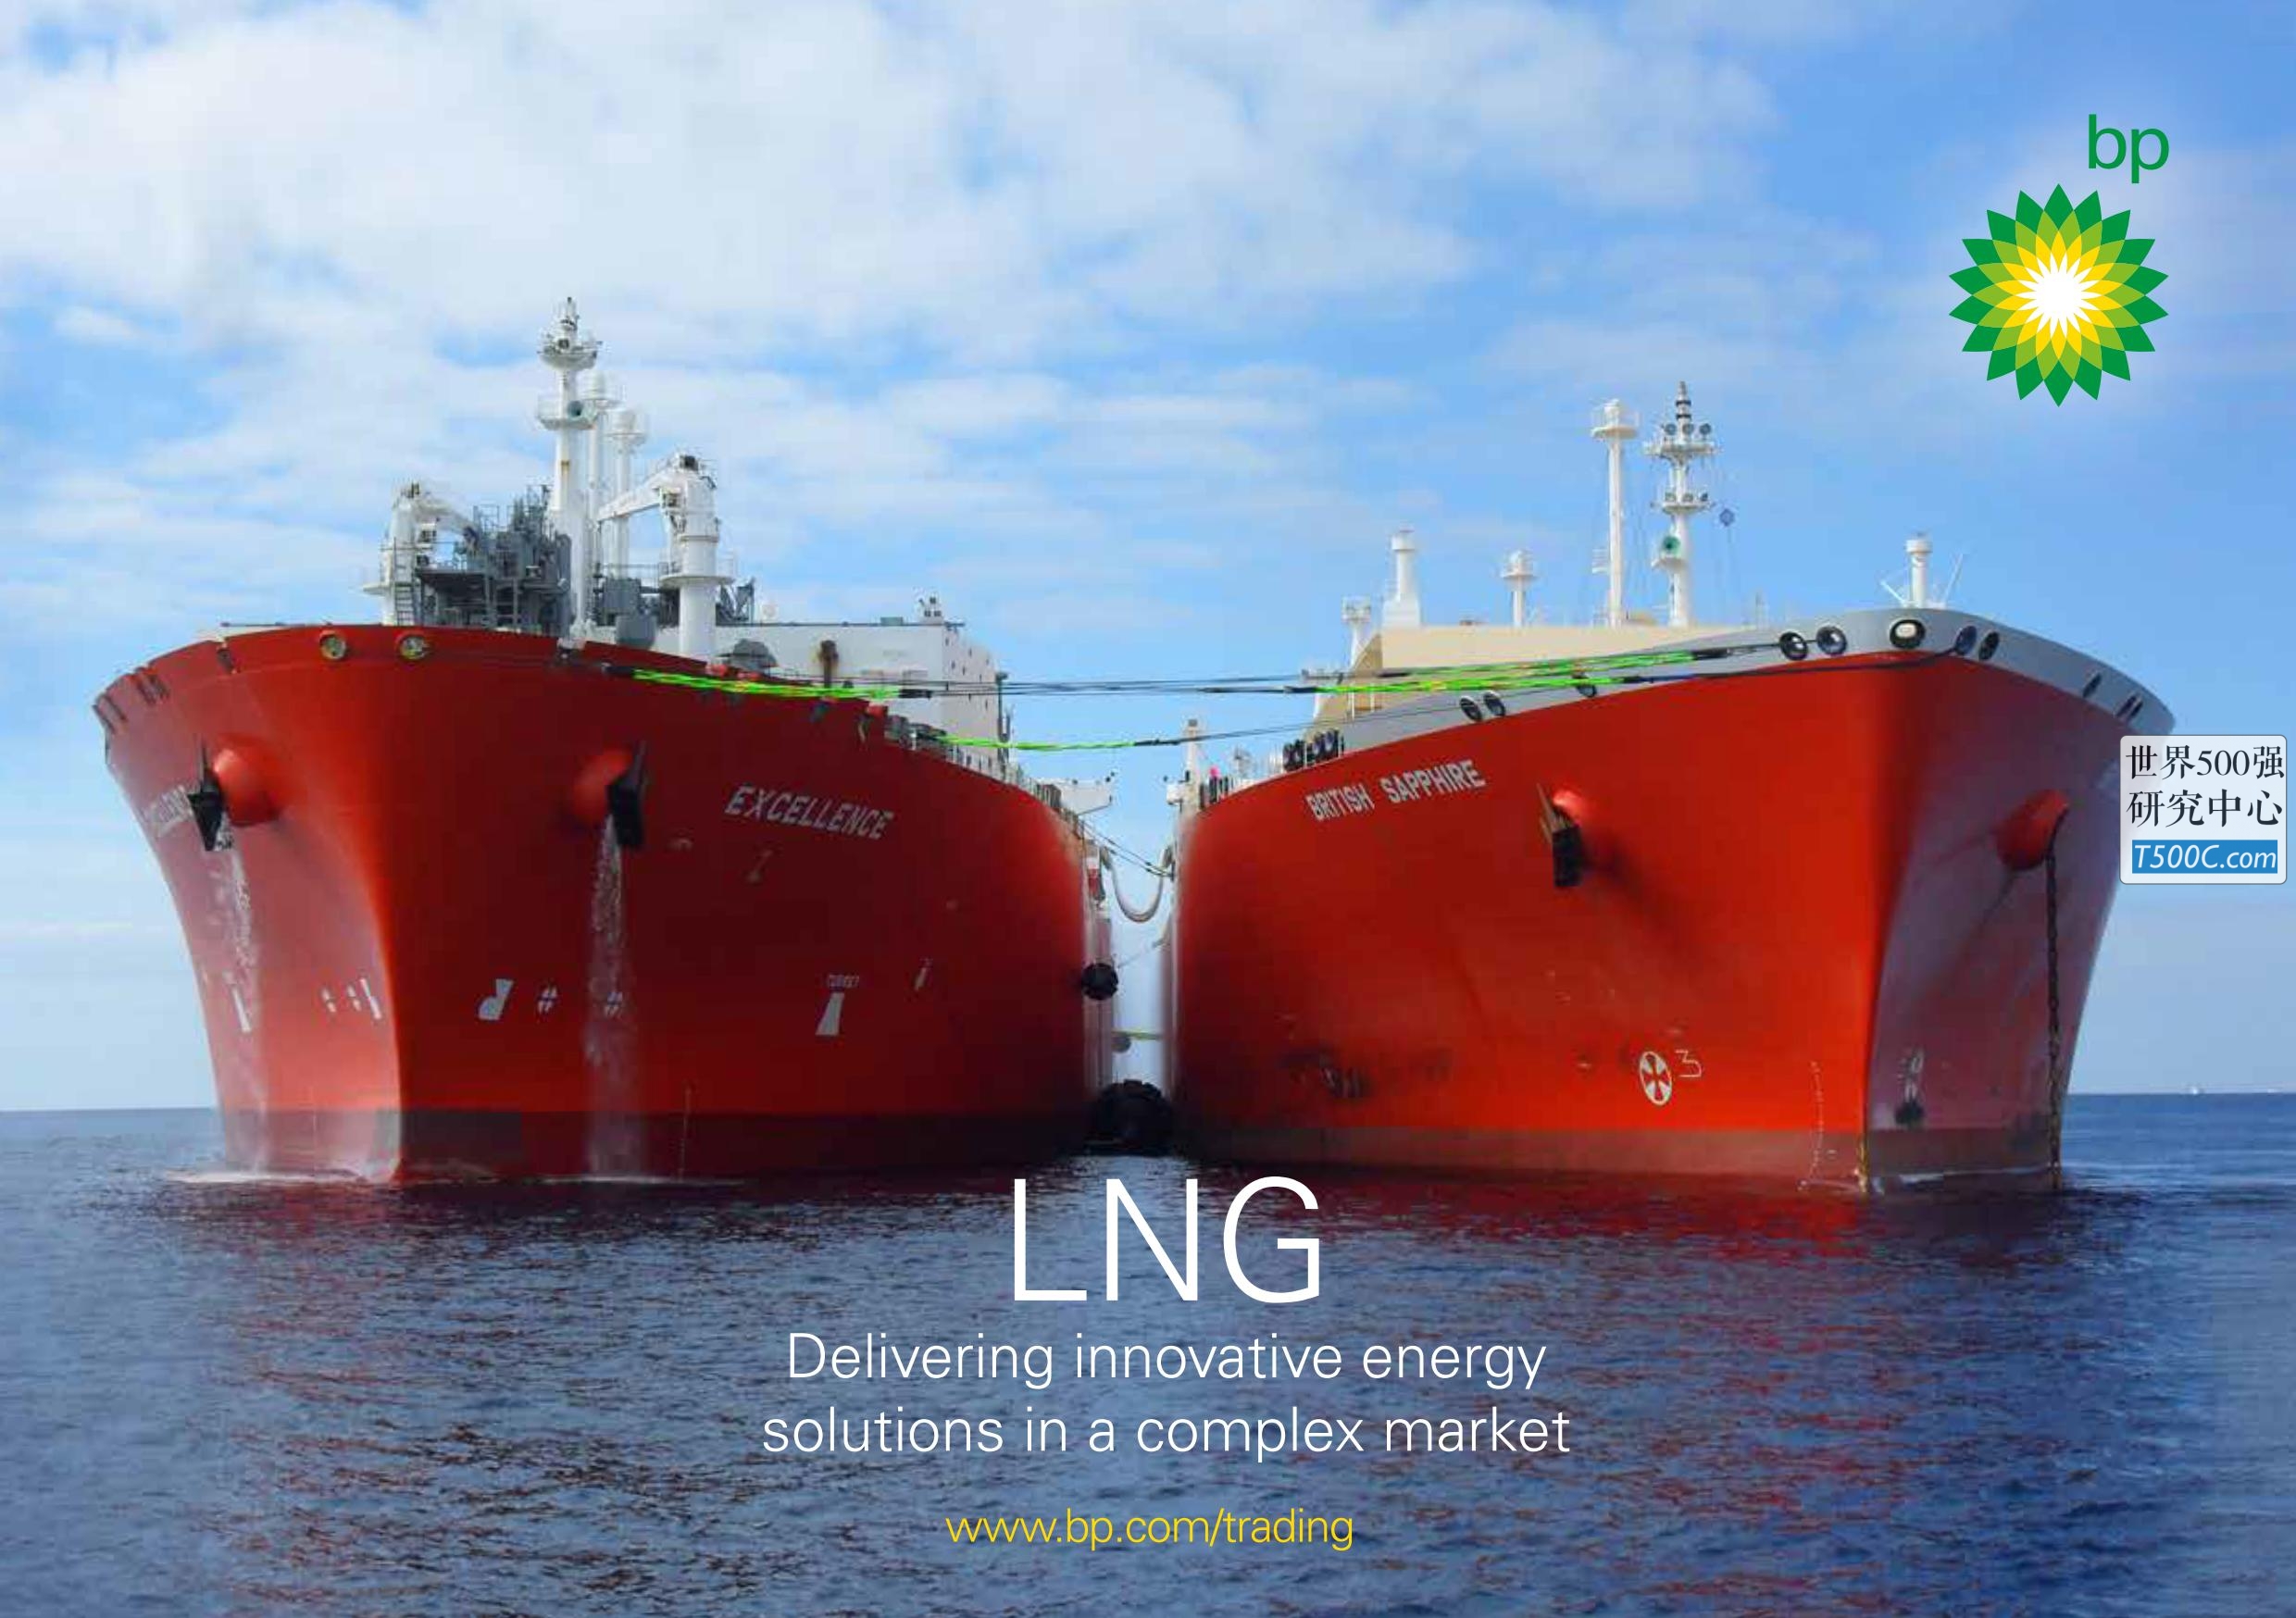 英国石油BP_业务宣传册Brochure_T500C.com_LNG 2018.pdf